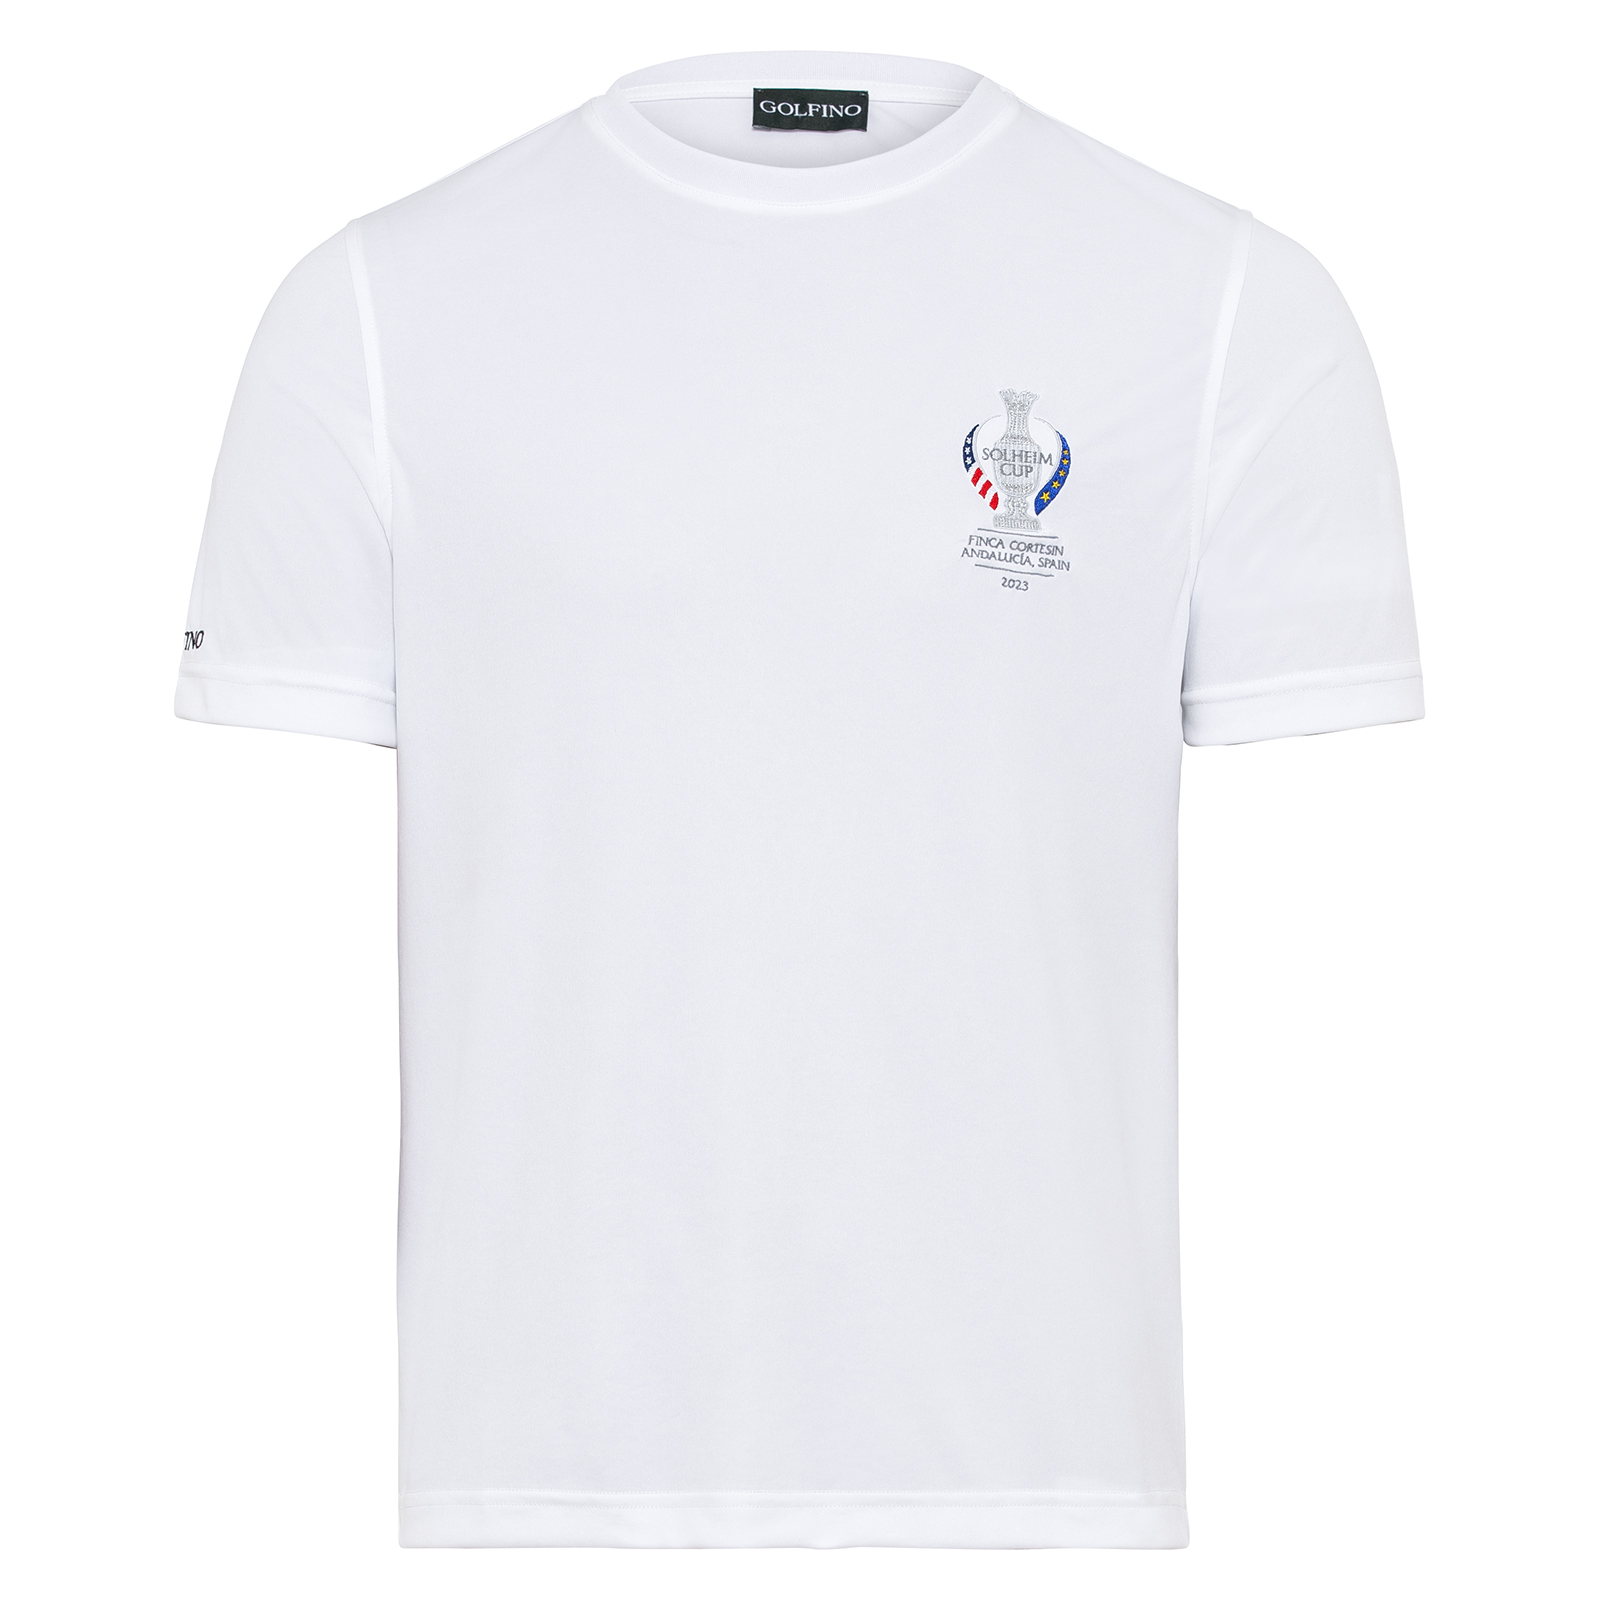 T-shirt de golf doux anti-UV de design Solheim Cup 